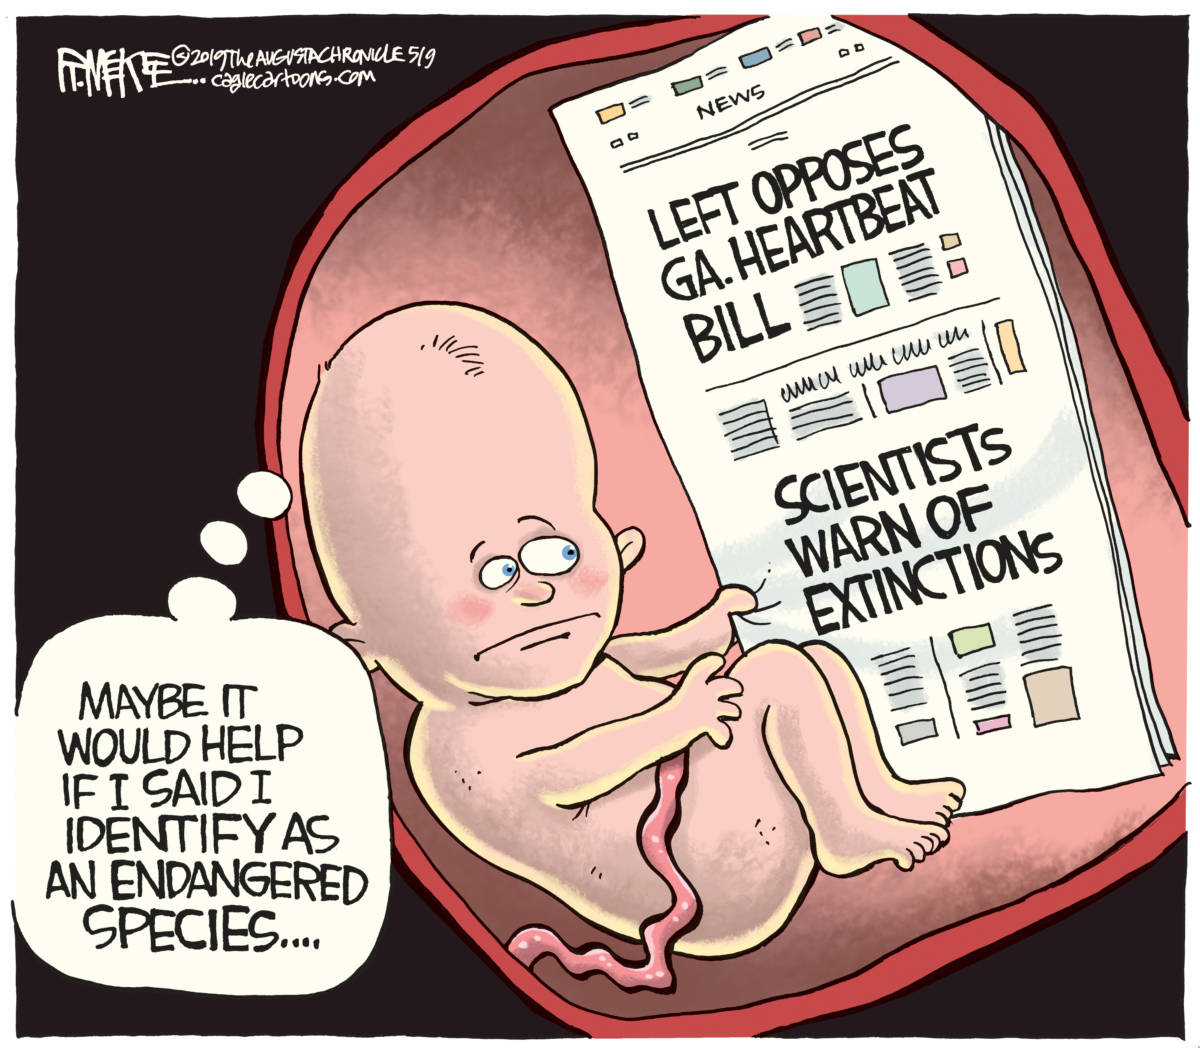 GA Abortion Heartbeat Bill, Rick McKee, Georgia,abortion,heartbeat bill,Kemp,global warming,extinctions, climate change